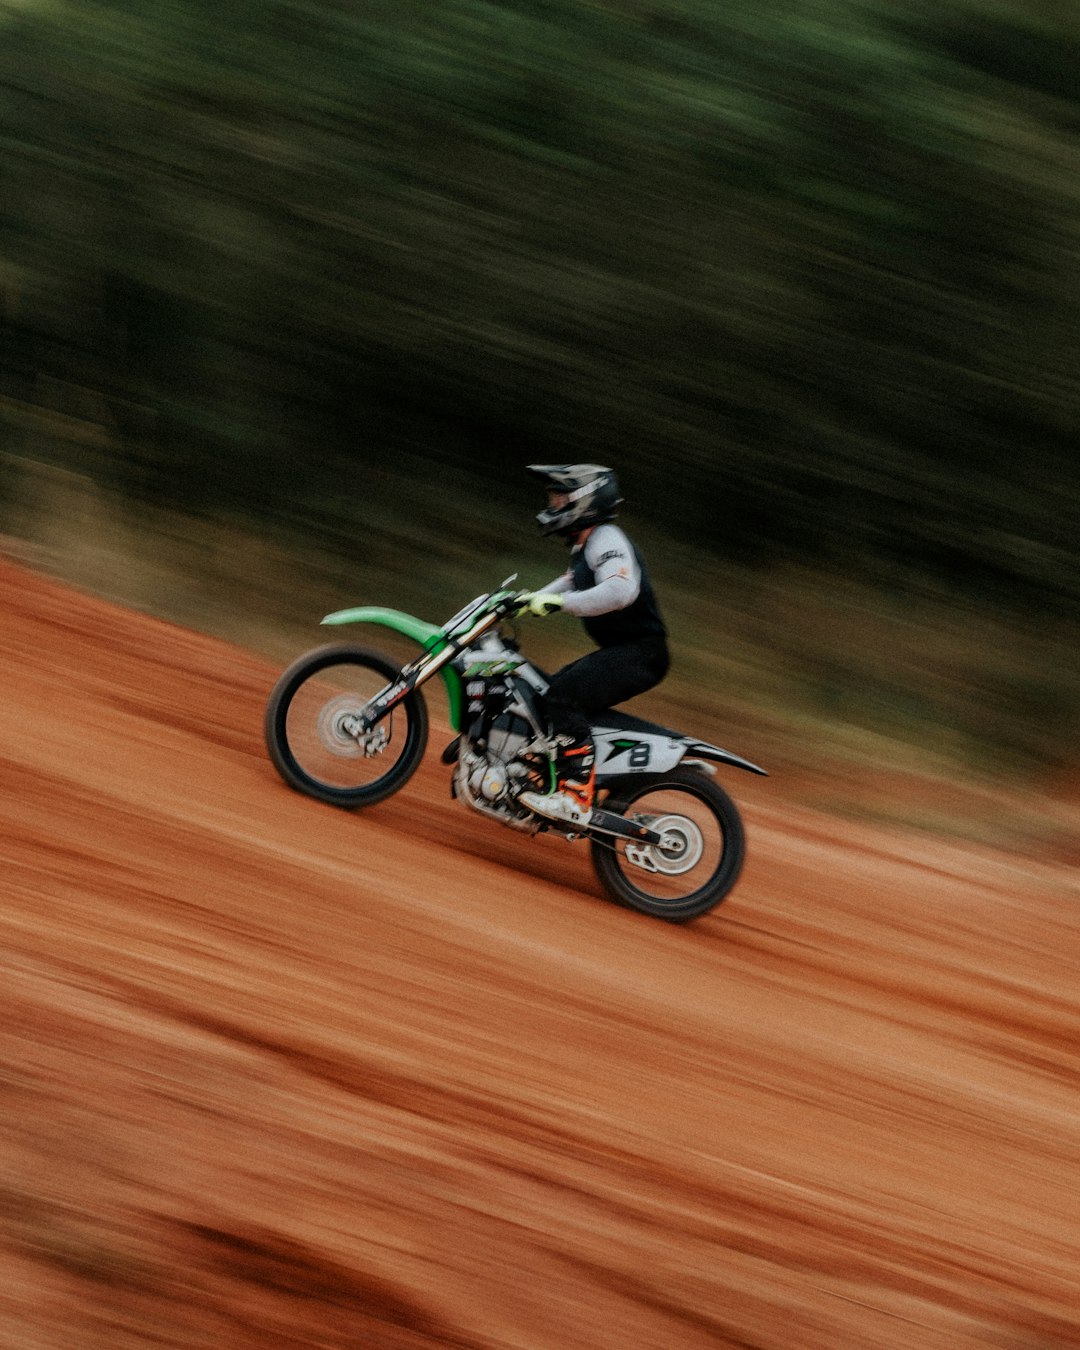 man riding motocross dirt bike on brown field during daytime